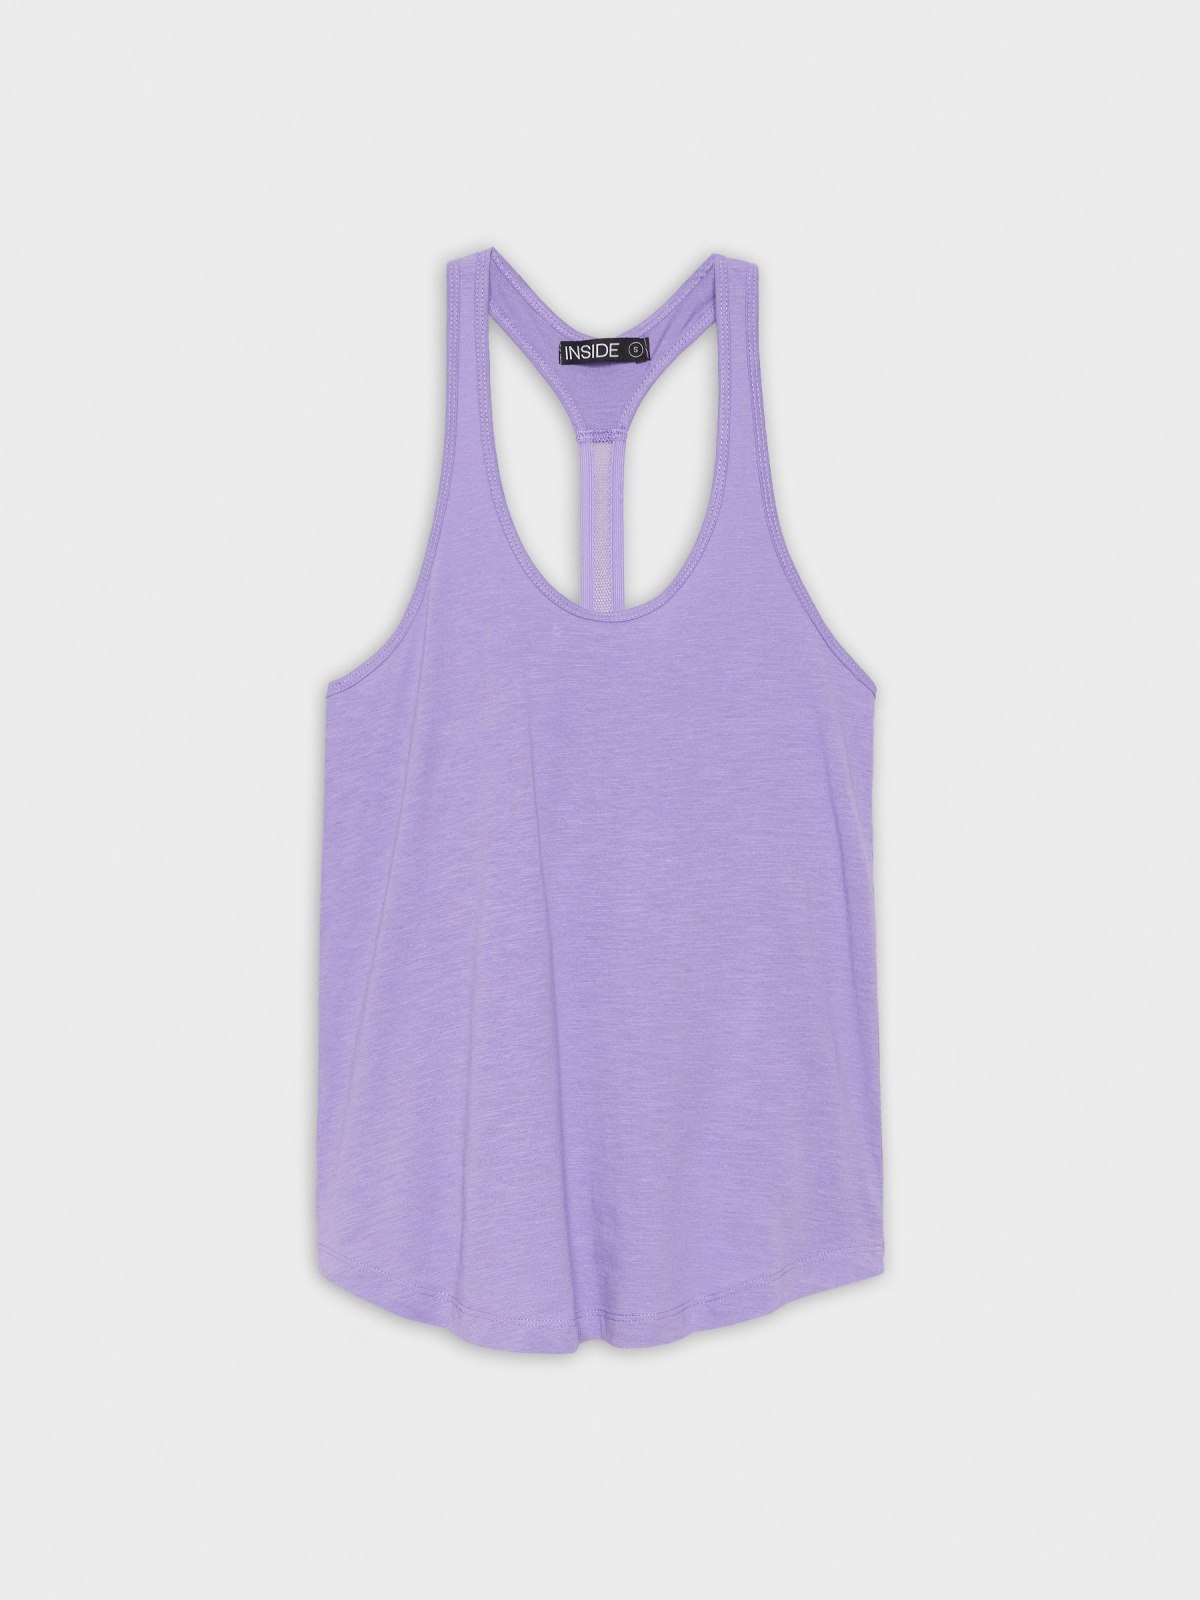  Camiseta espalda nadadora lila